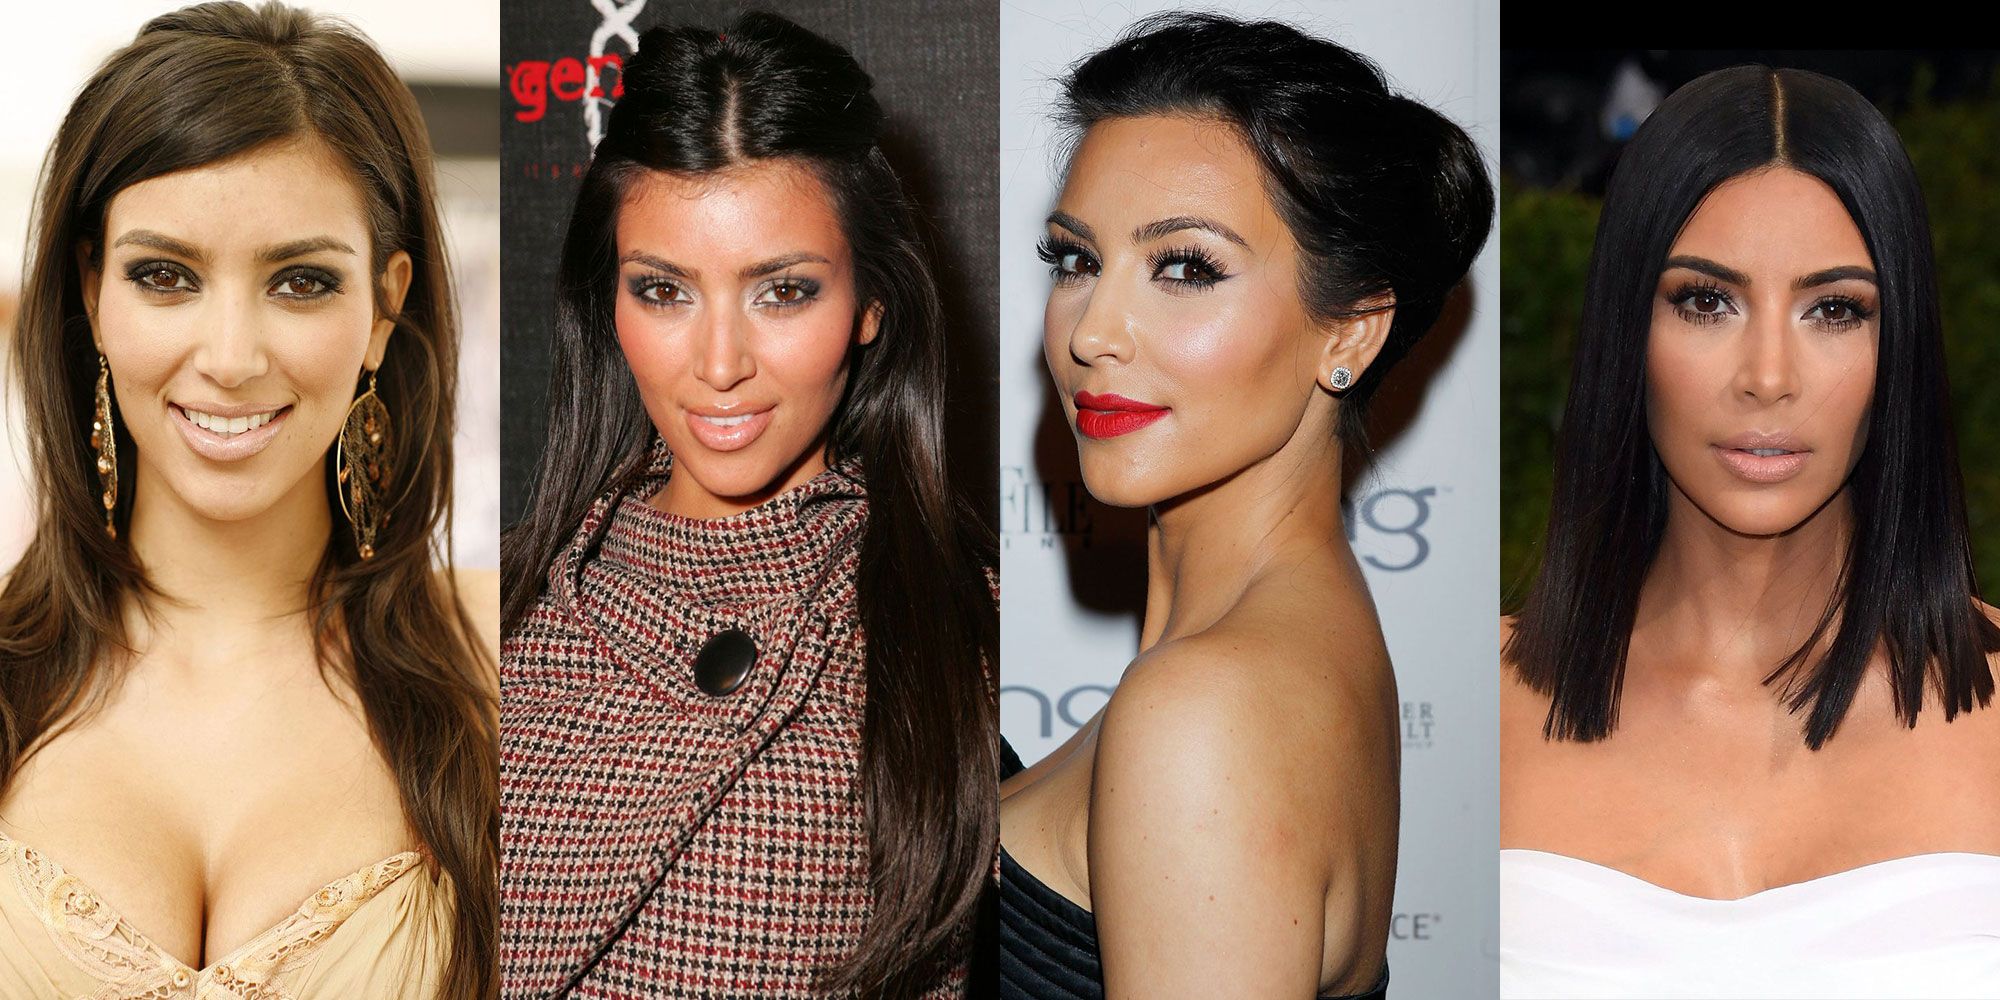 Paris takes a swipe at former BFF Kim Kardashian's reality show